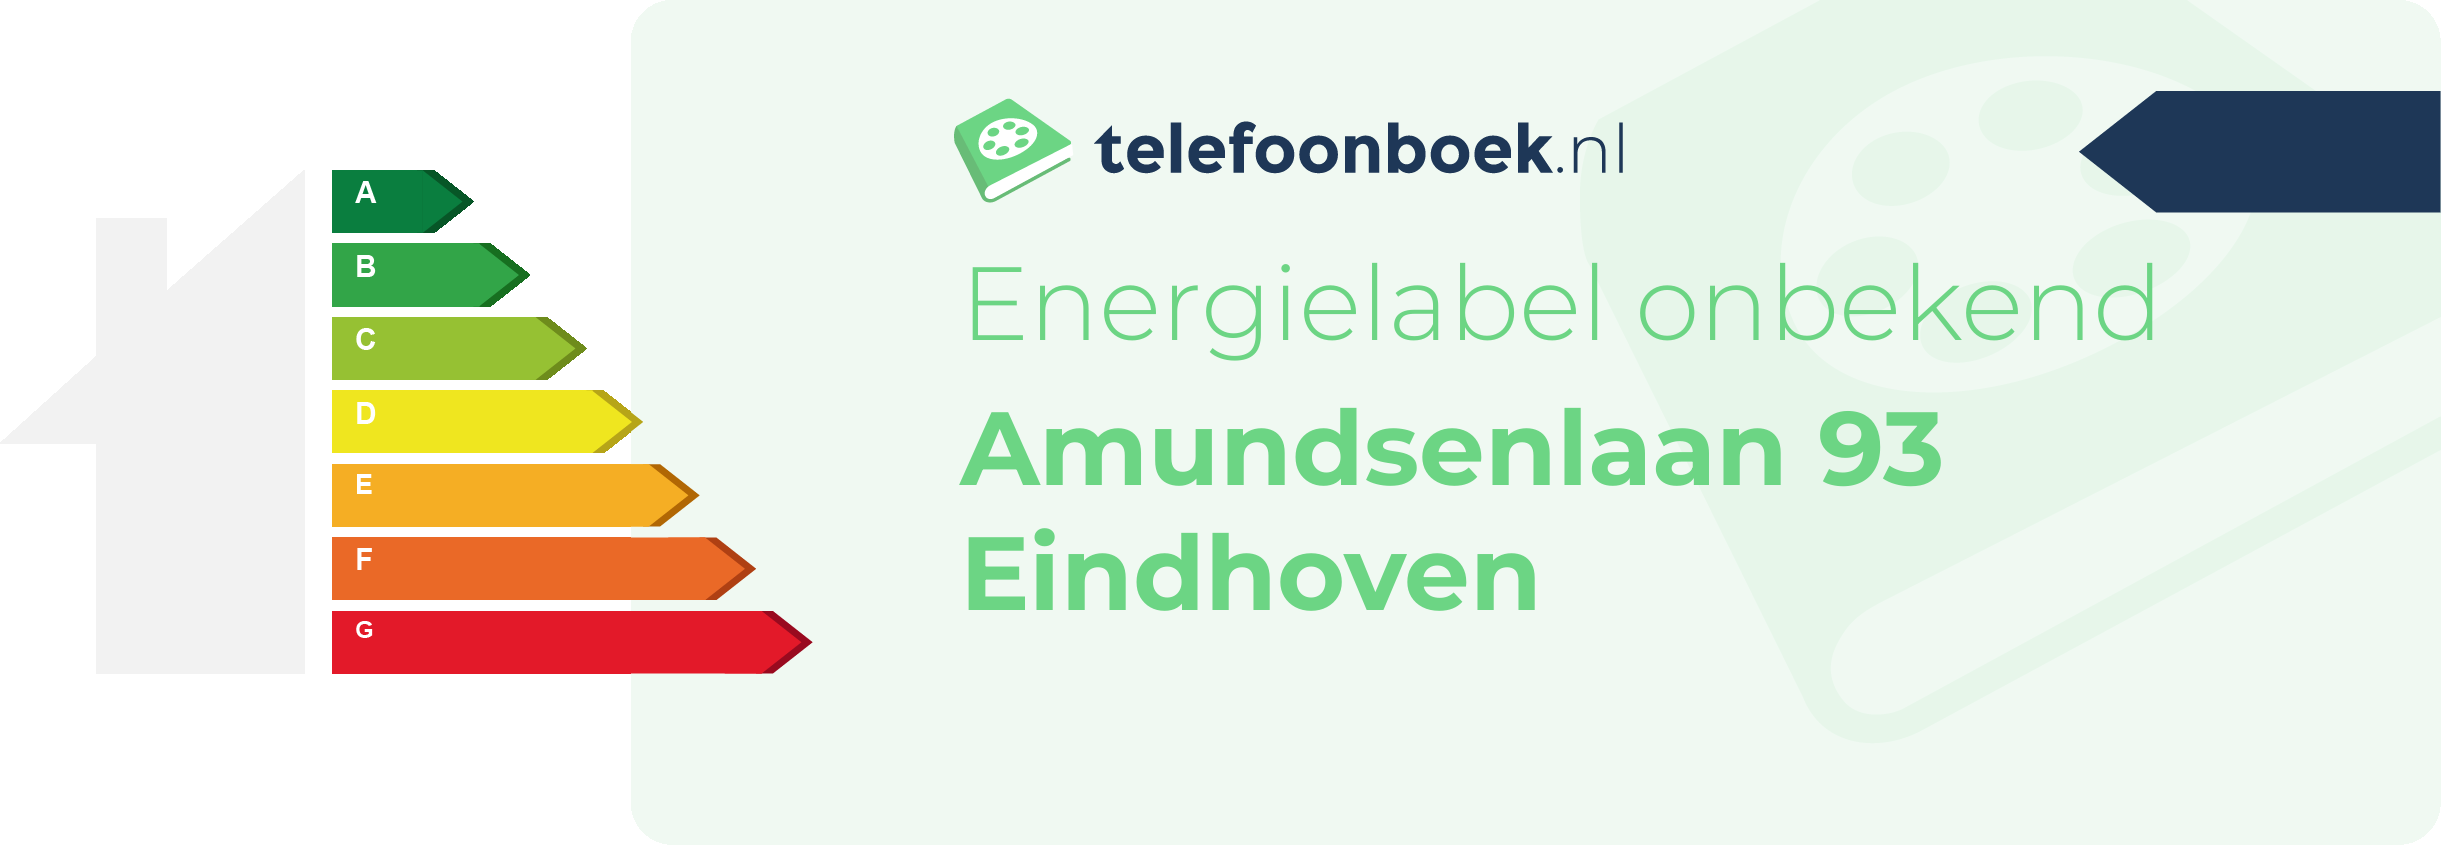 Energielabel Amundsenlaan 93 Eindhoven